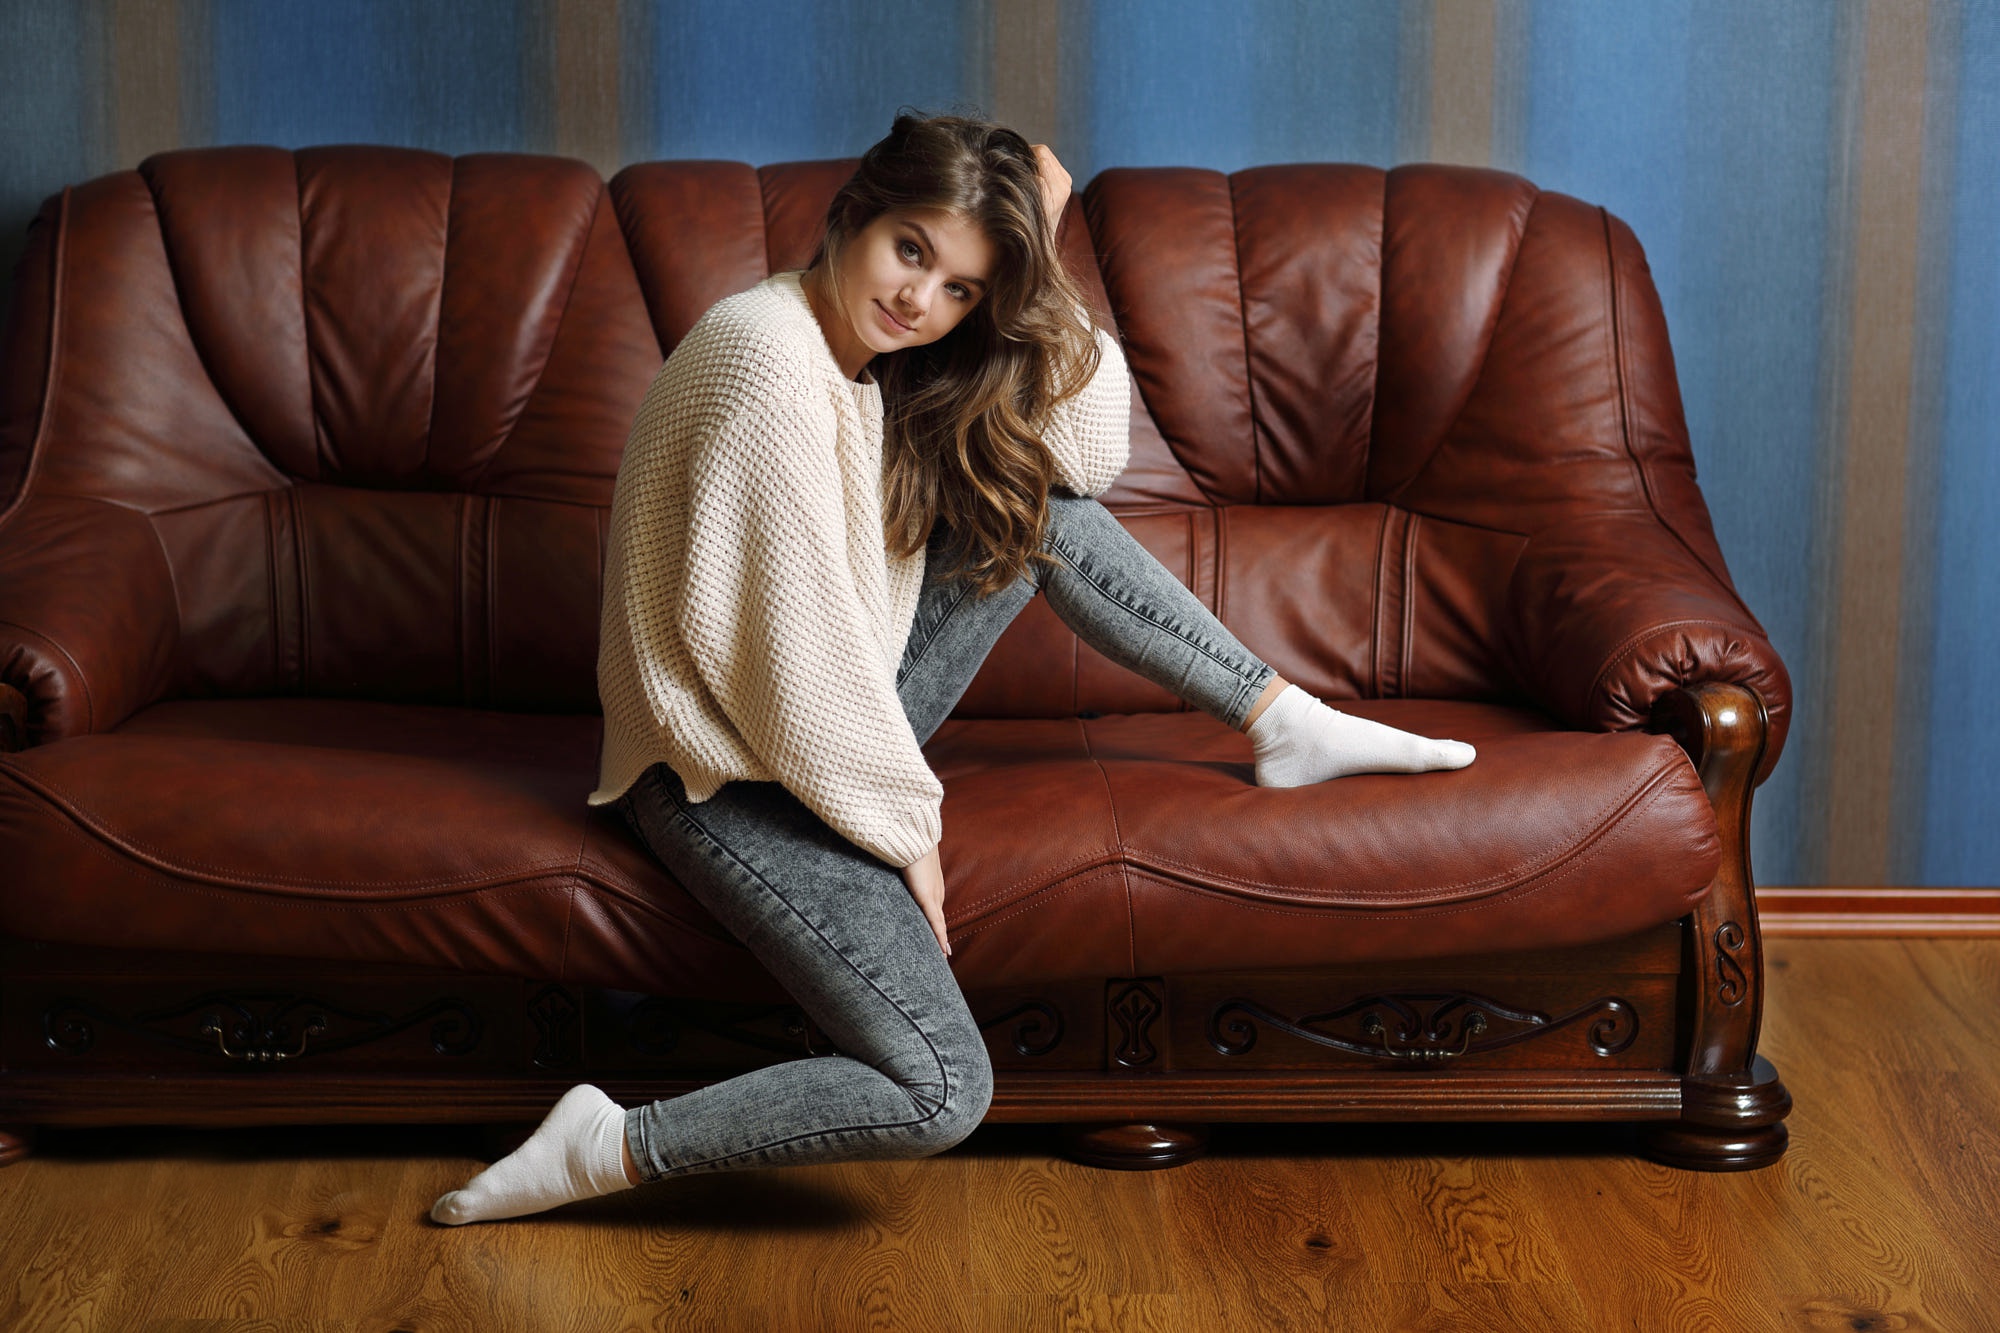 Вибратор на диване. Девушка на кожаном диване. Девушки в носочках. Фотосессия на диване. Девушка в джинсах и носках.